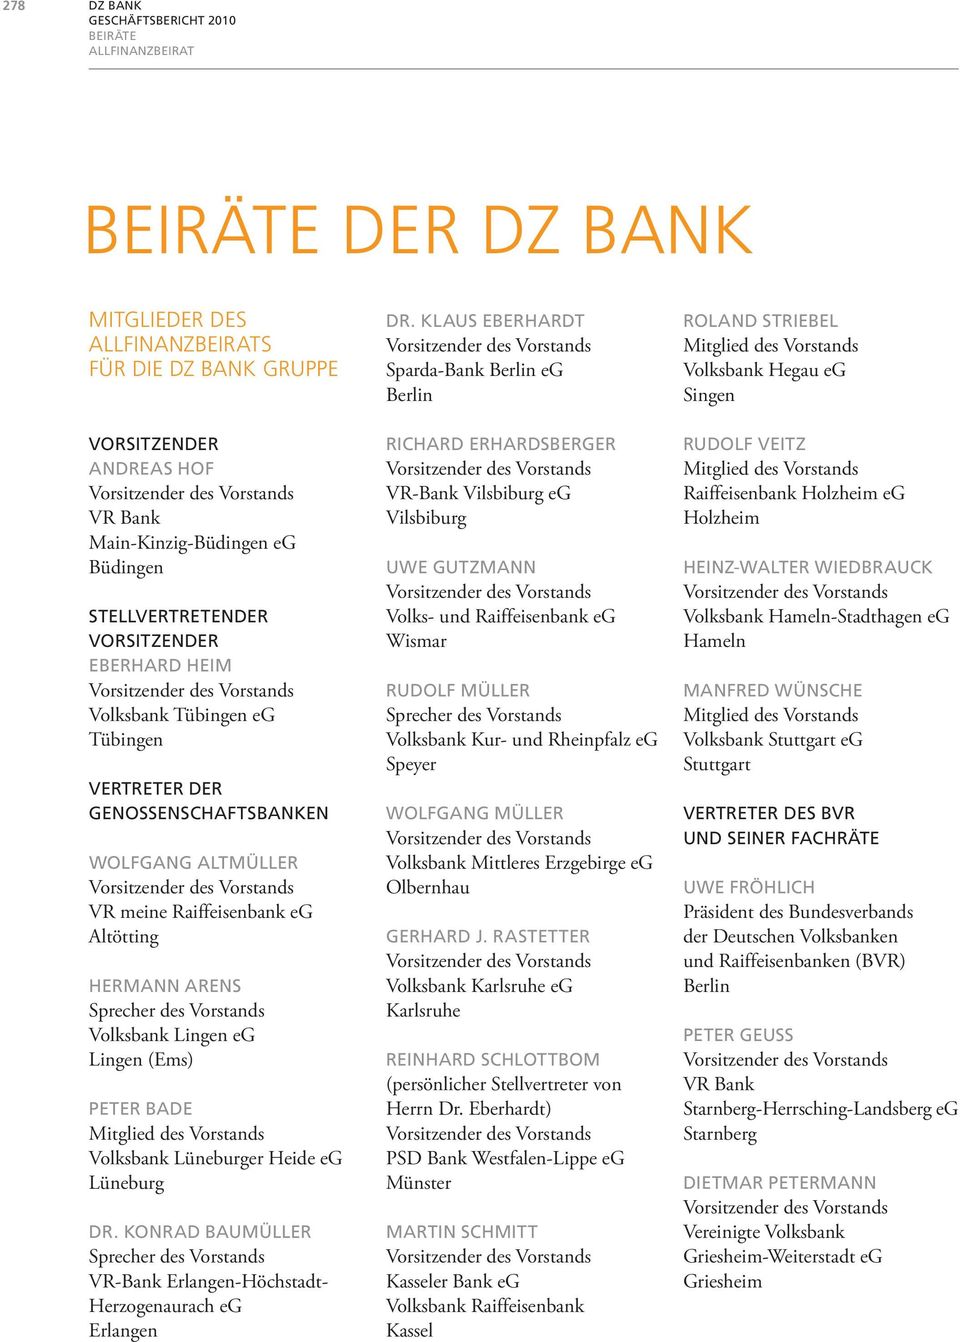 Lüneburger Heide eg Lüneburg Dr. Konrad Baumüller VR-Bank Erlangen-Höchstadt- Herzogenaurach eg Erlangen Dr.